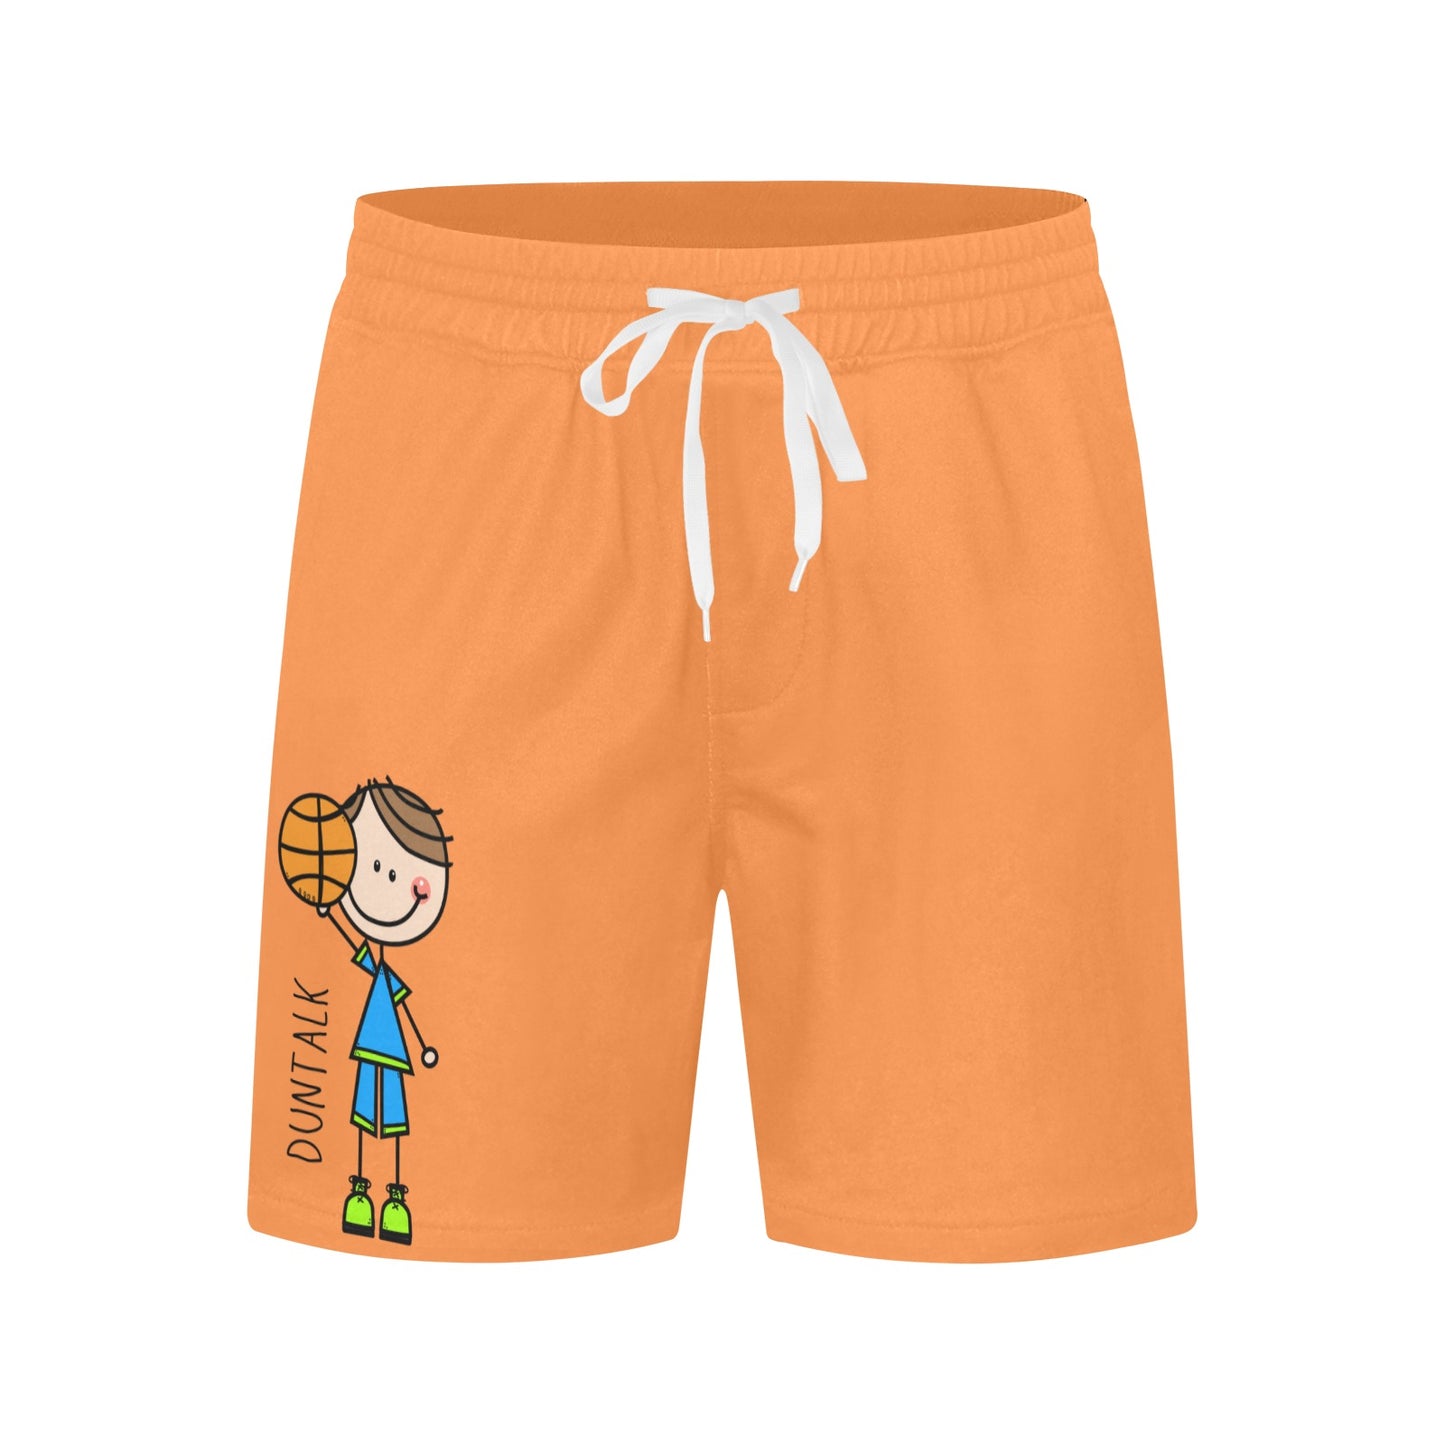 Duntalk "Doodle" Mid-Length Shorts Orange